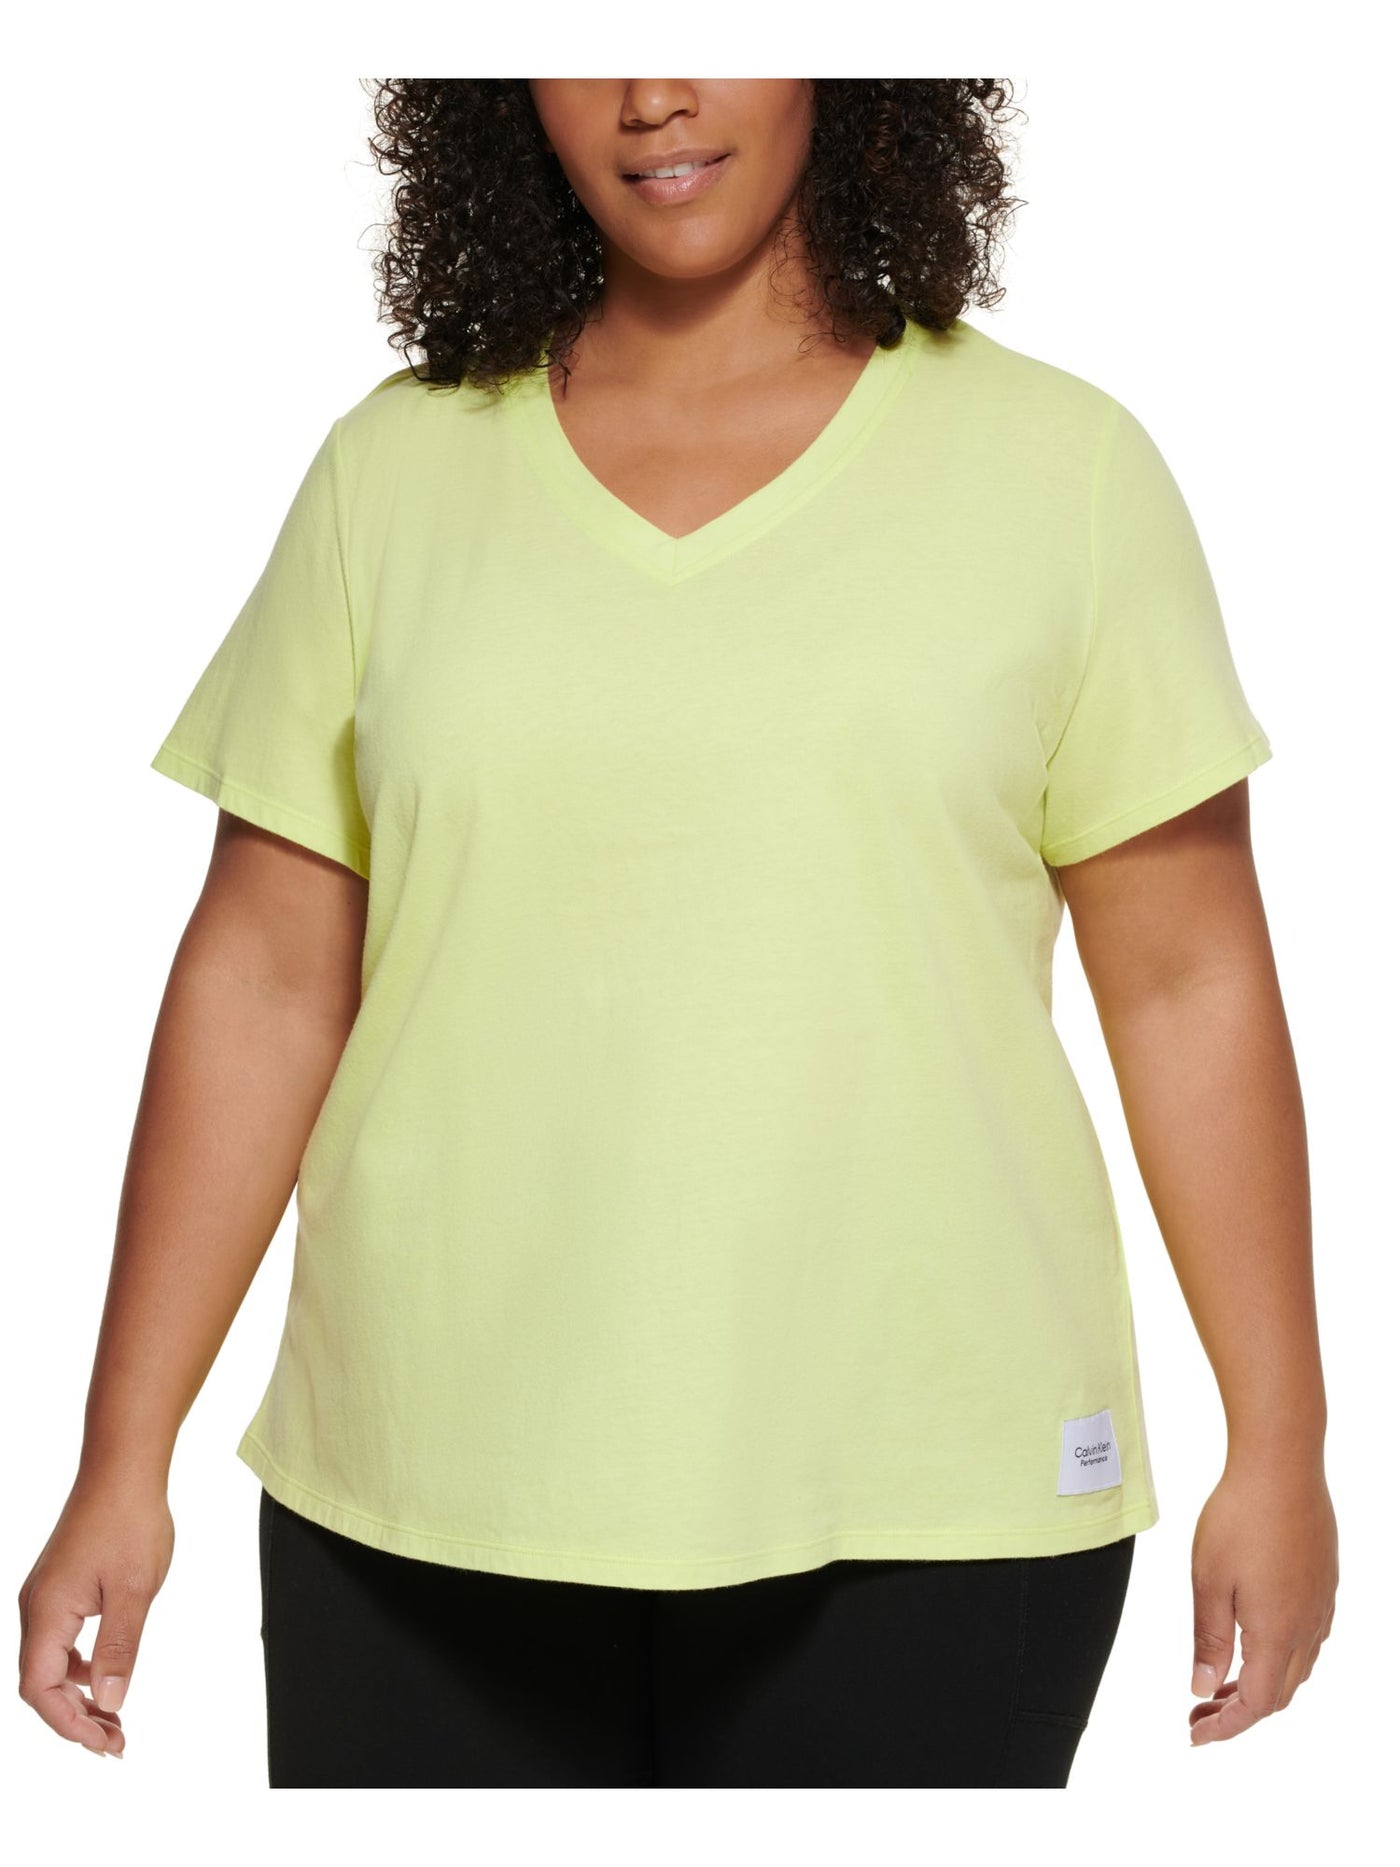 CALVIN KLEIN PERFORMANCE Womens Green Short Sleeve V Neck T-Shirt Plus 1X